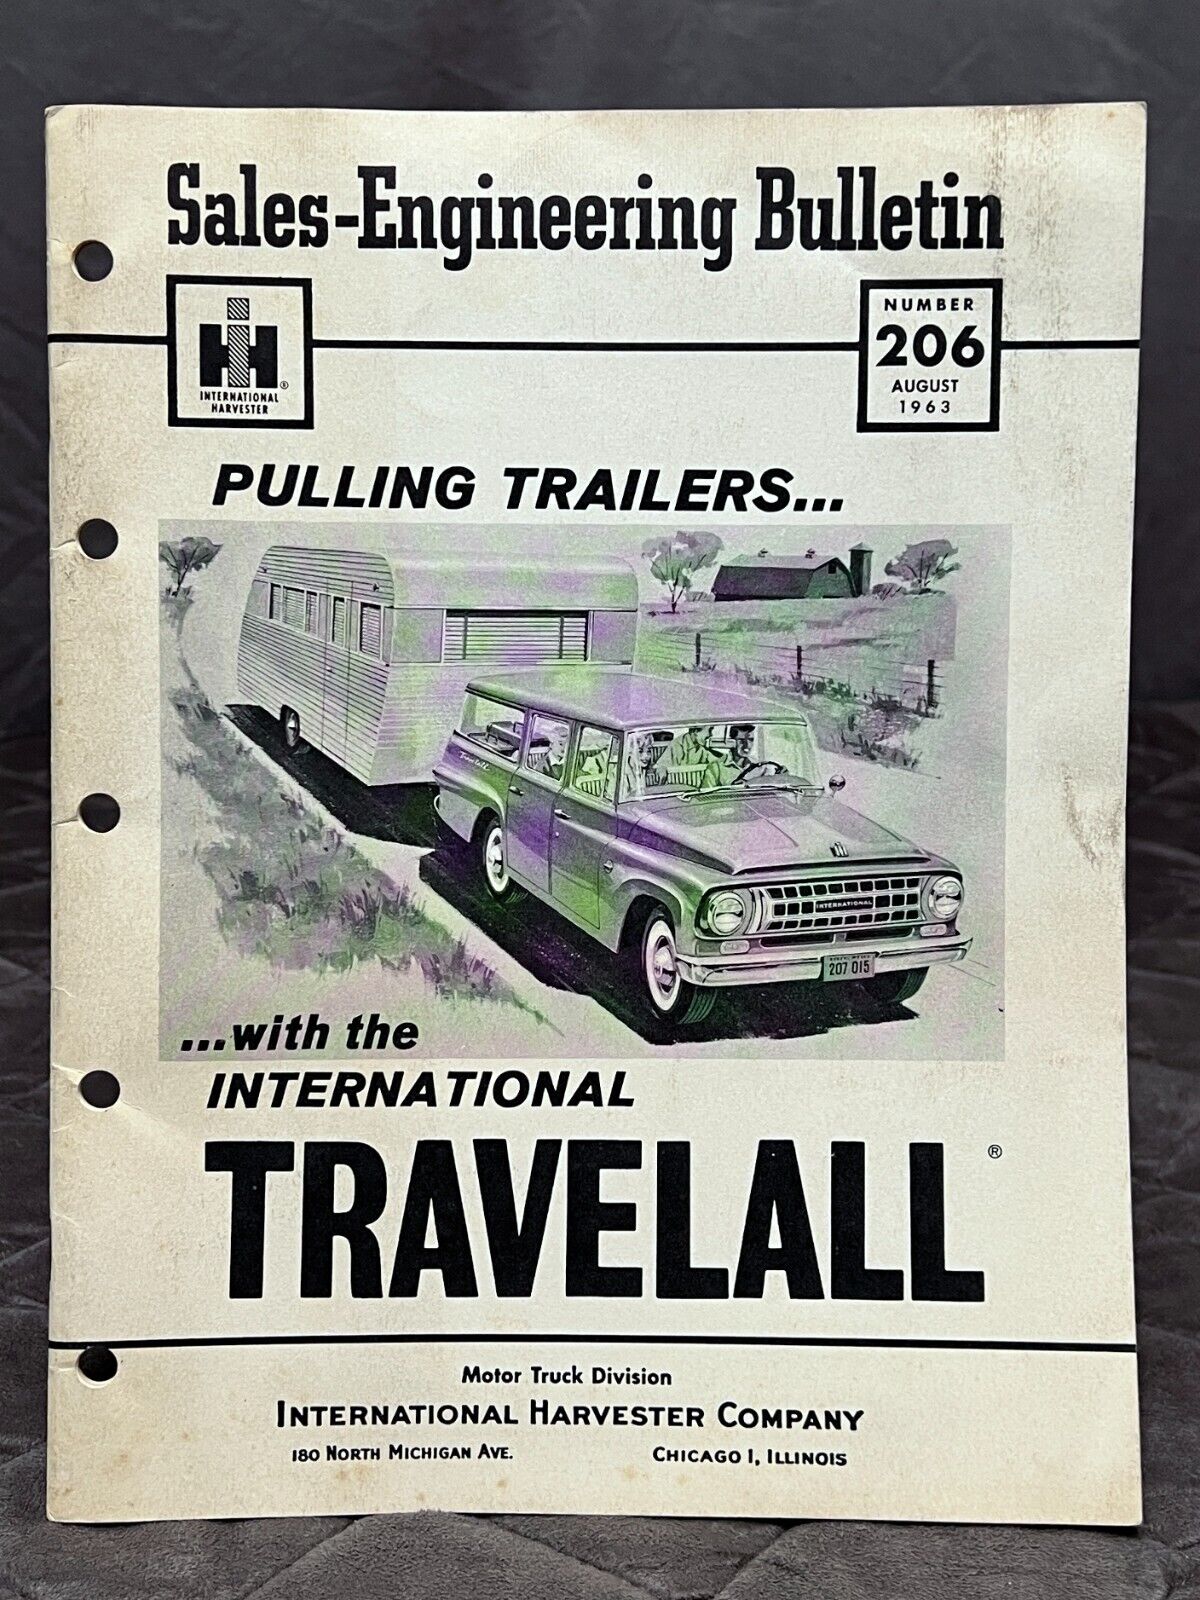 1963 Sales Engineering Bulletin Book Pulling Trailers International Travelall